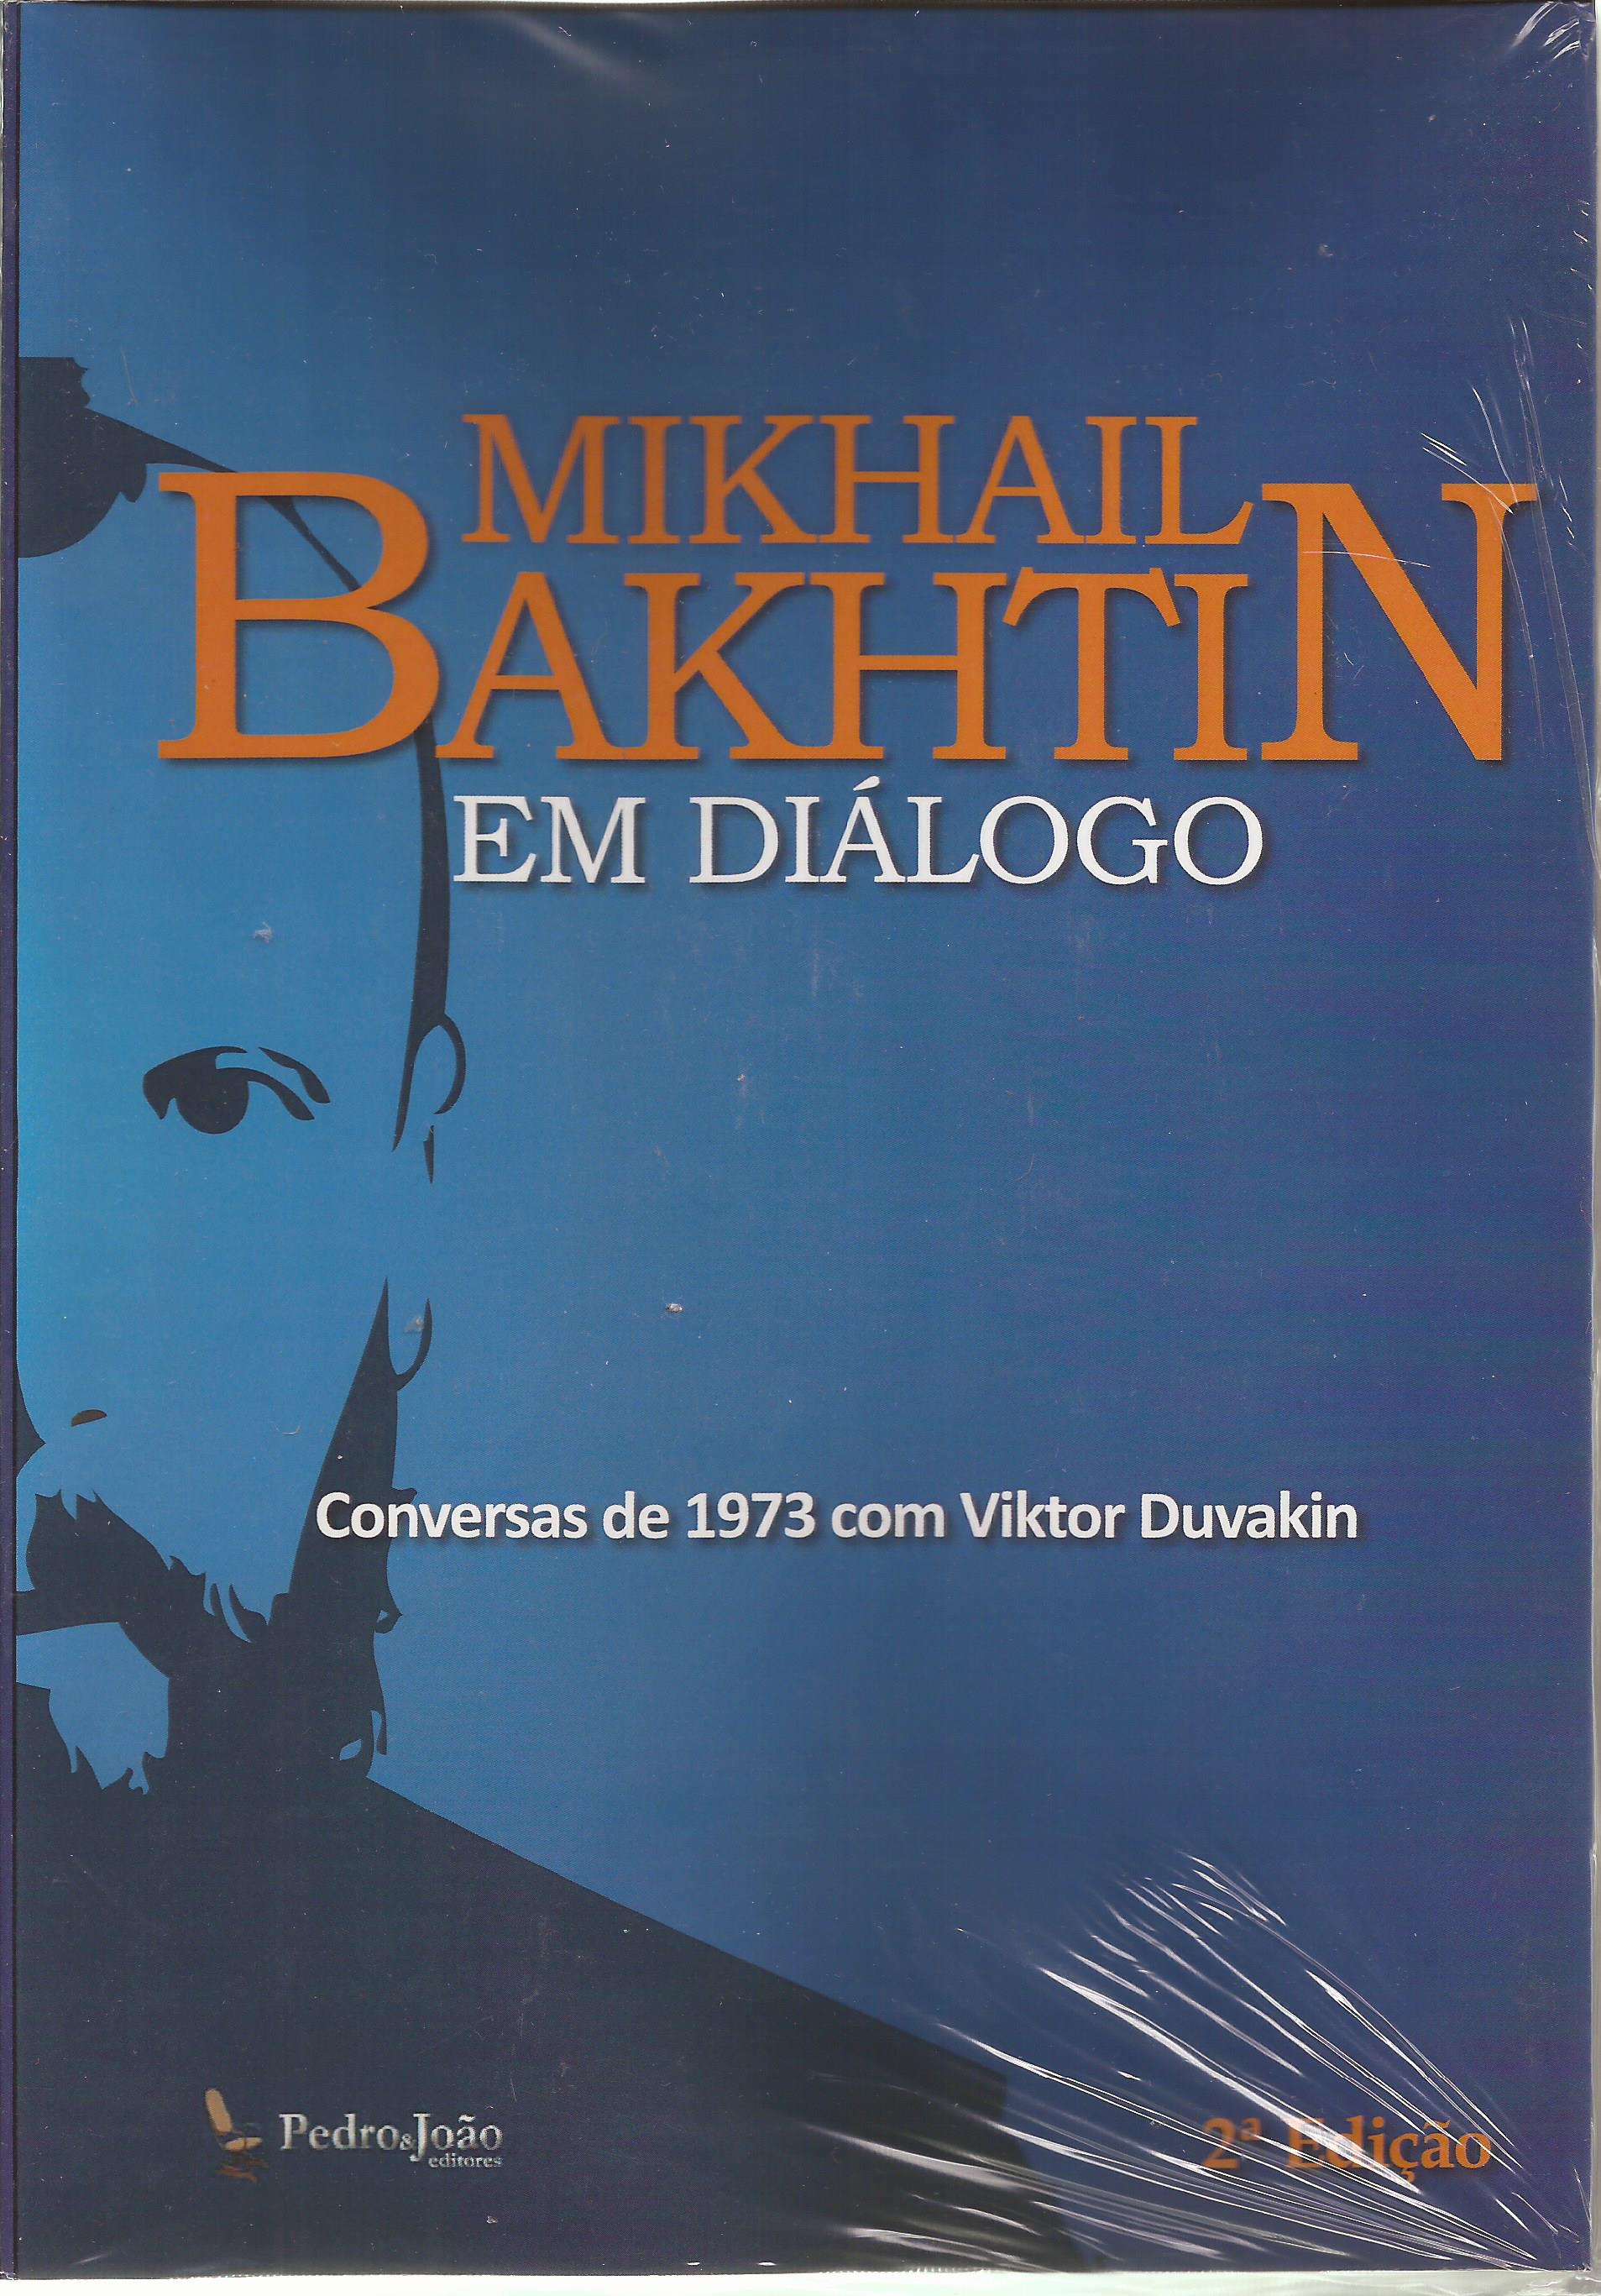 Mikhail Bakhtin em diálogo – Conversas de 1973 com Viktor Duvakin